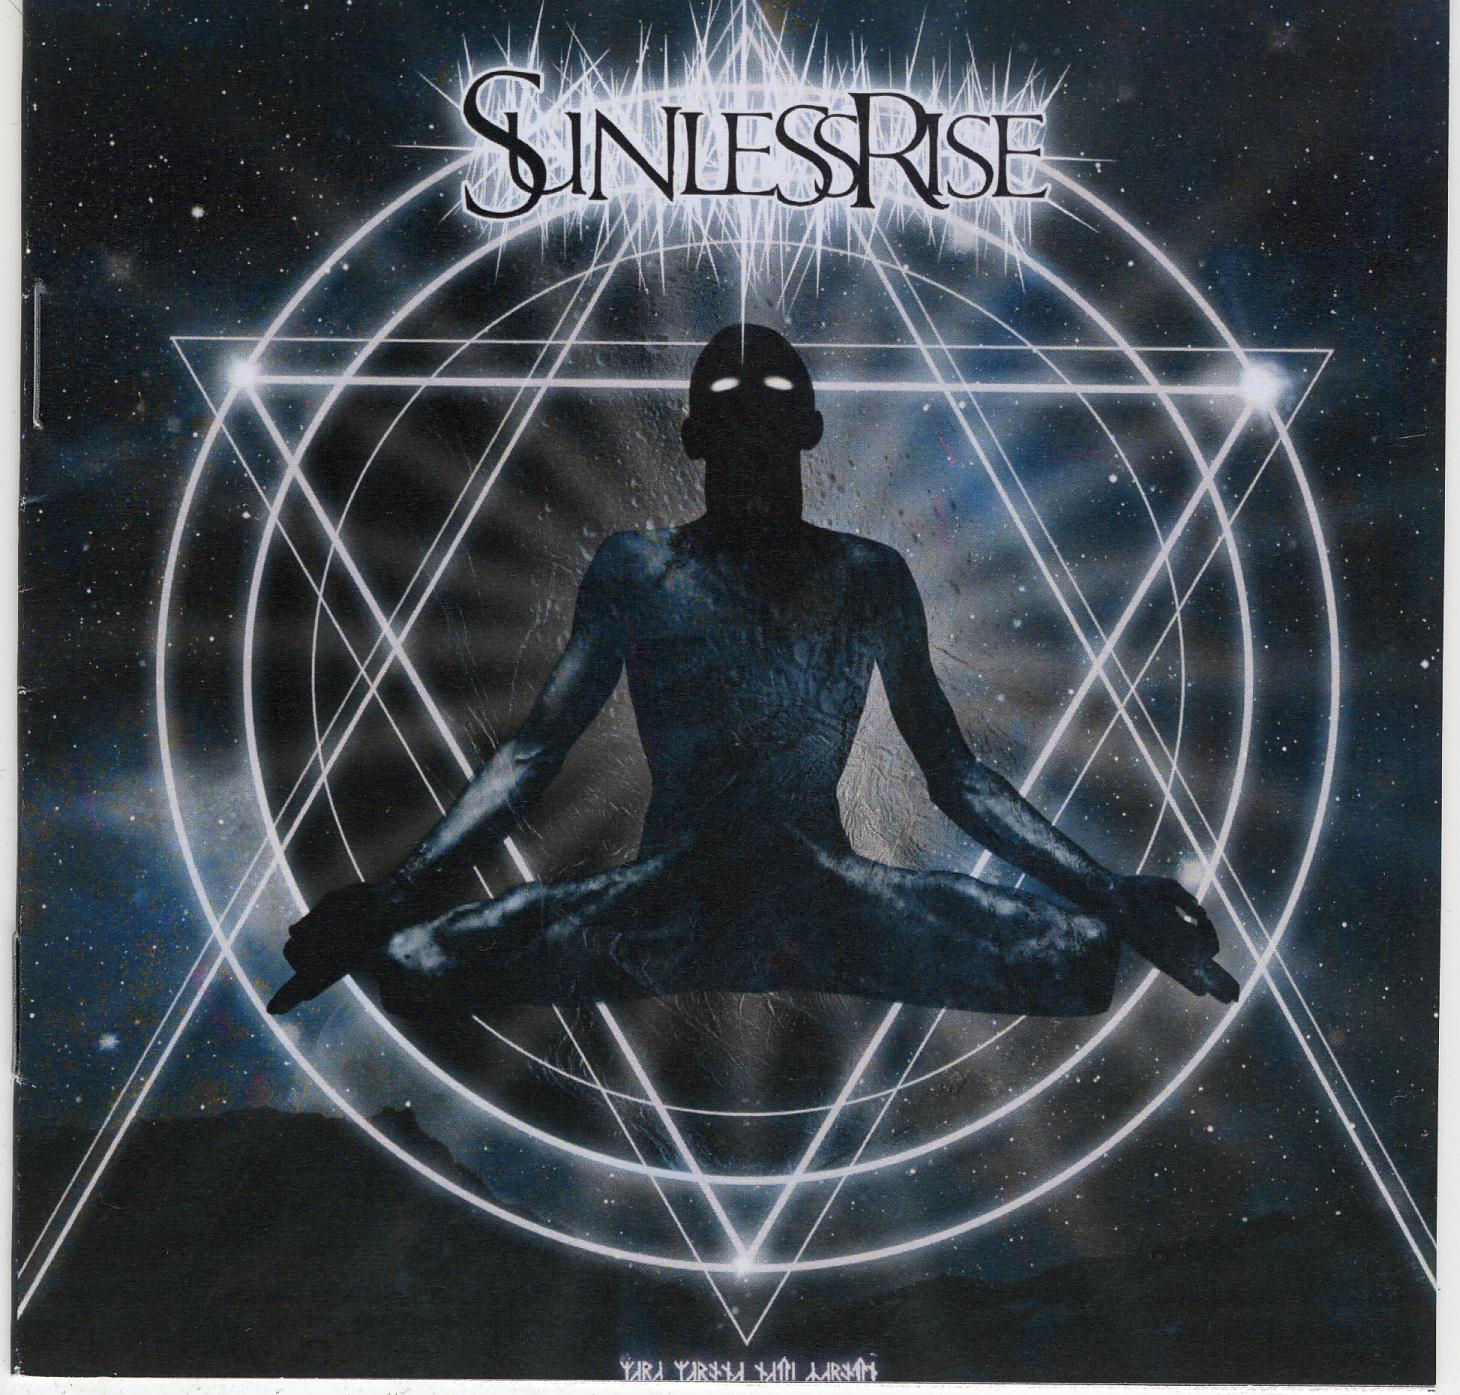 SunLess Rise - SunLess Rise 2009 - Cover.JPG